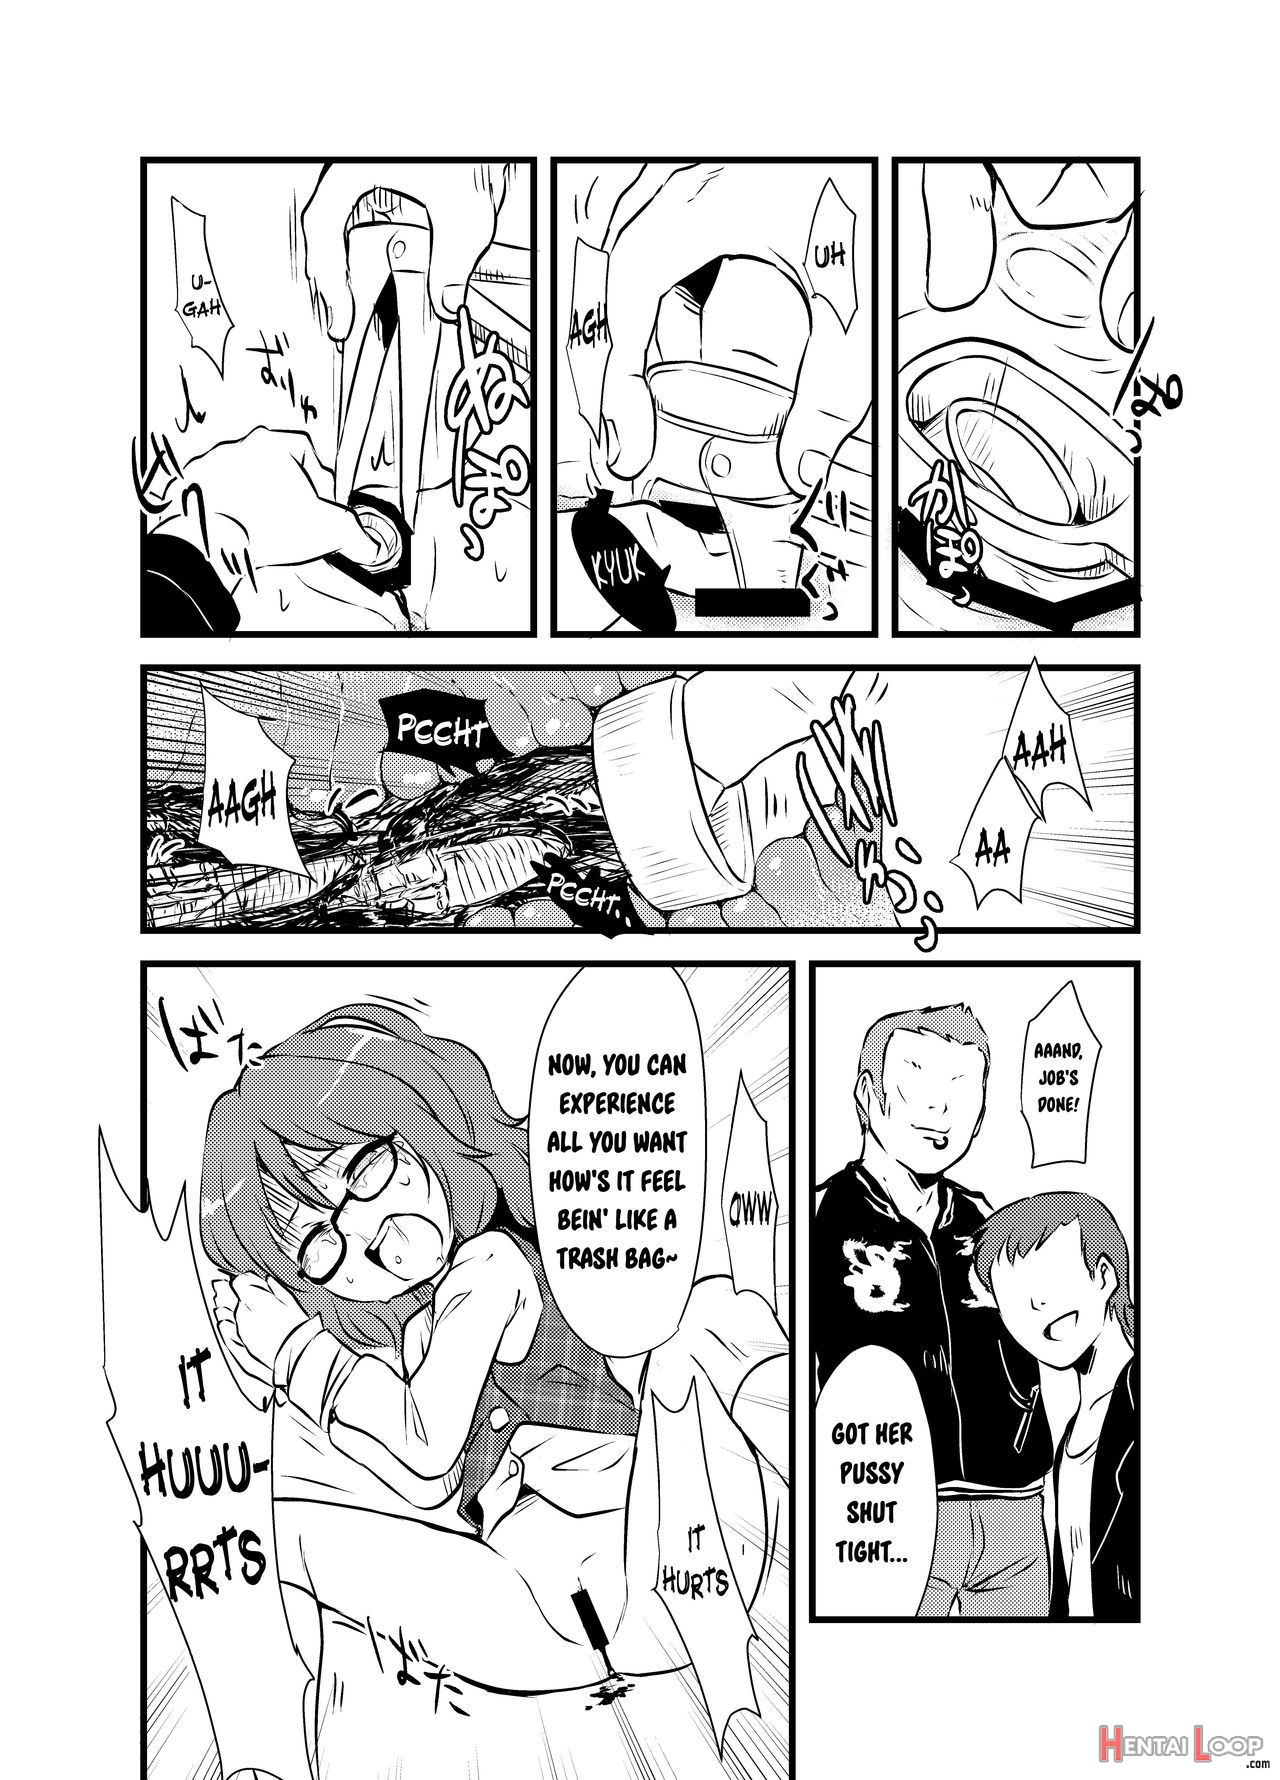 Sumirekochan's Pussy page 10